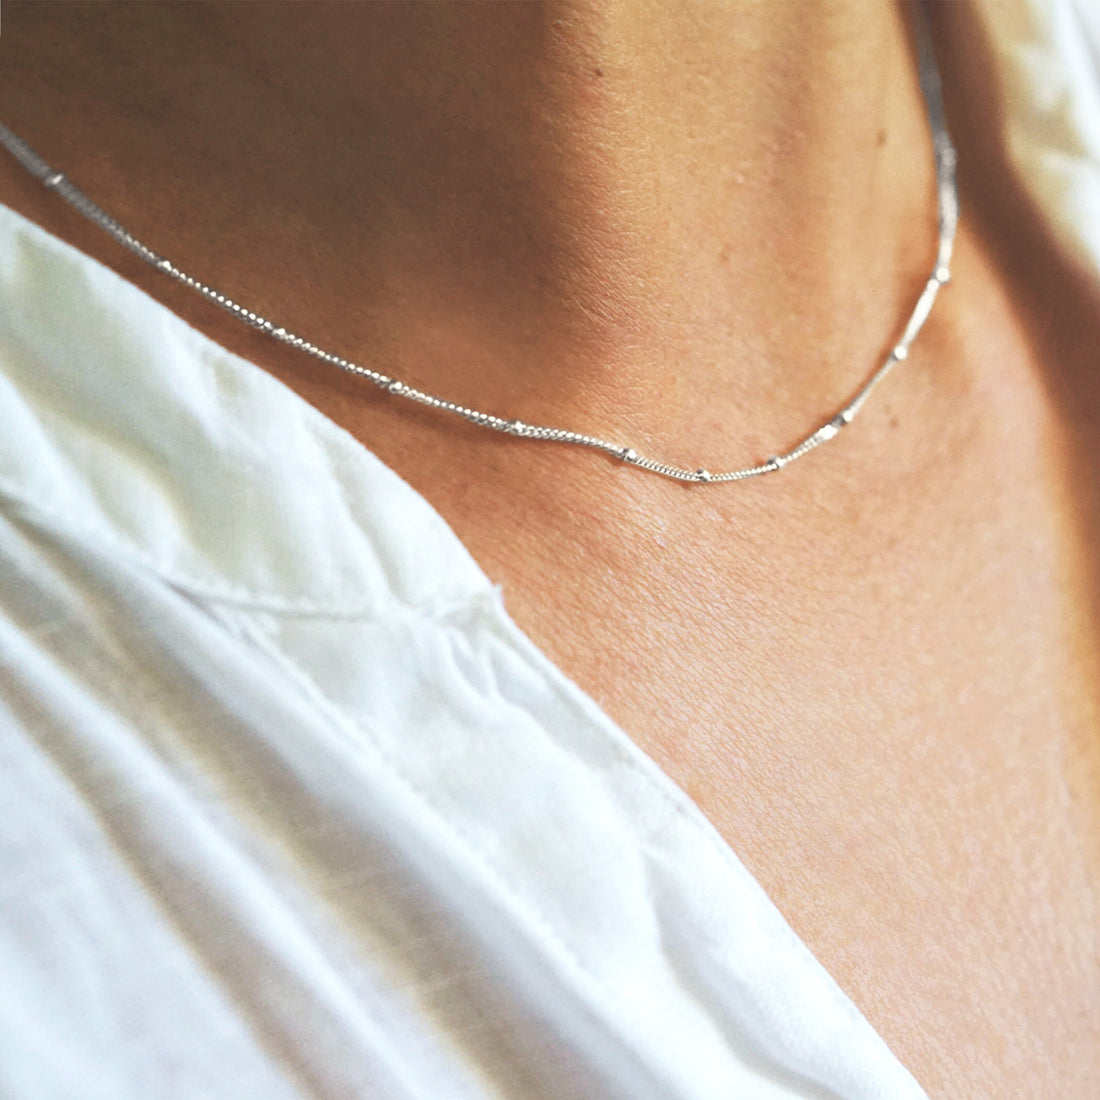 Satellite Chain Necklace - White Gold